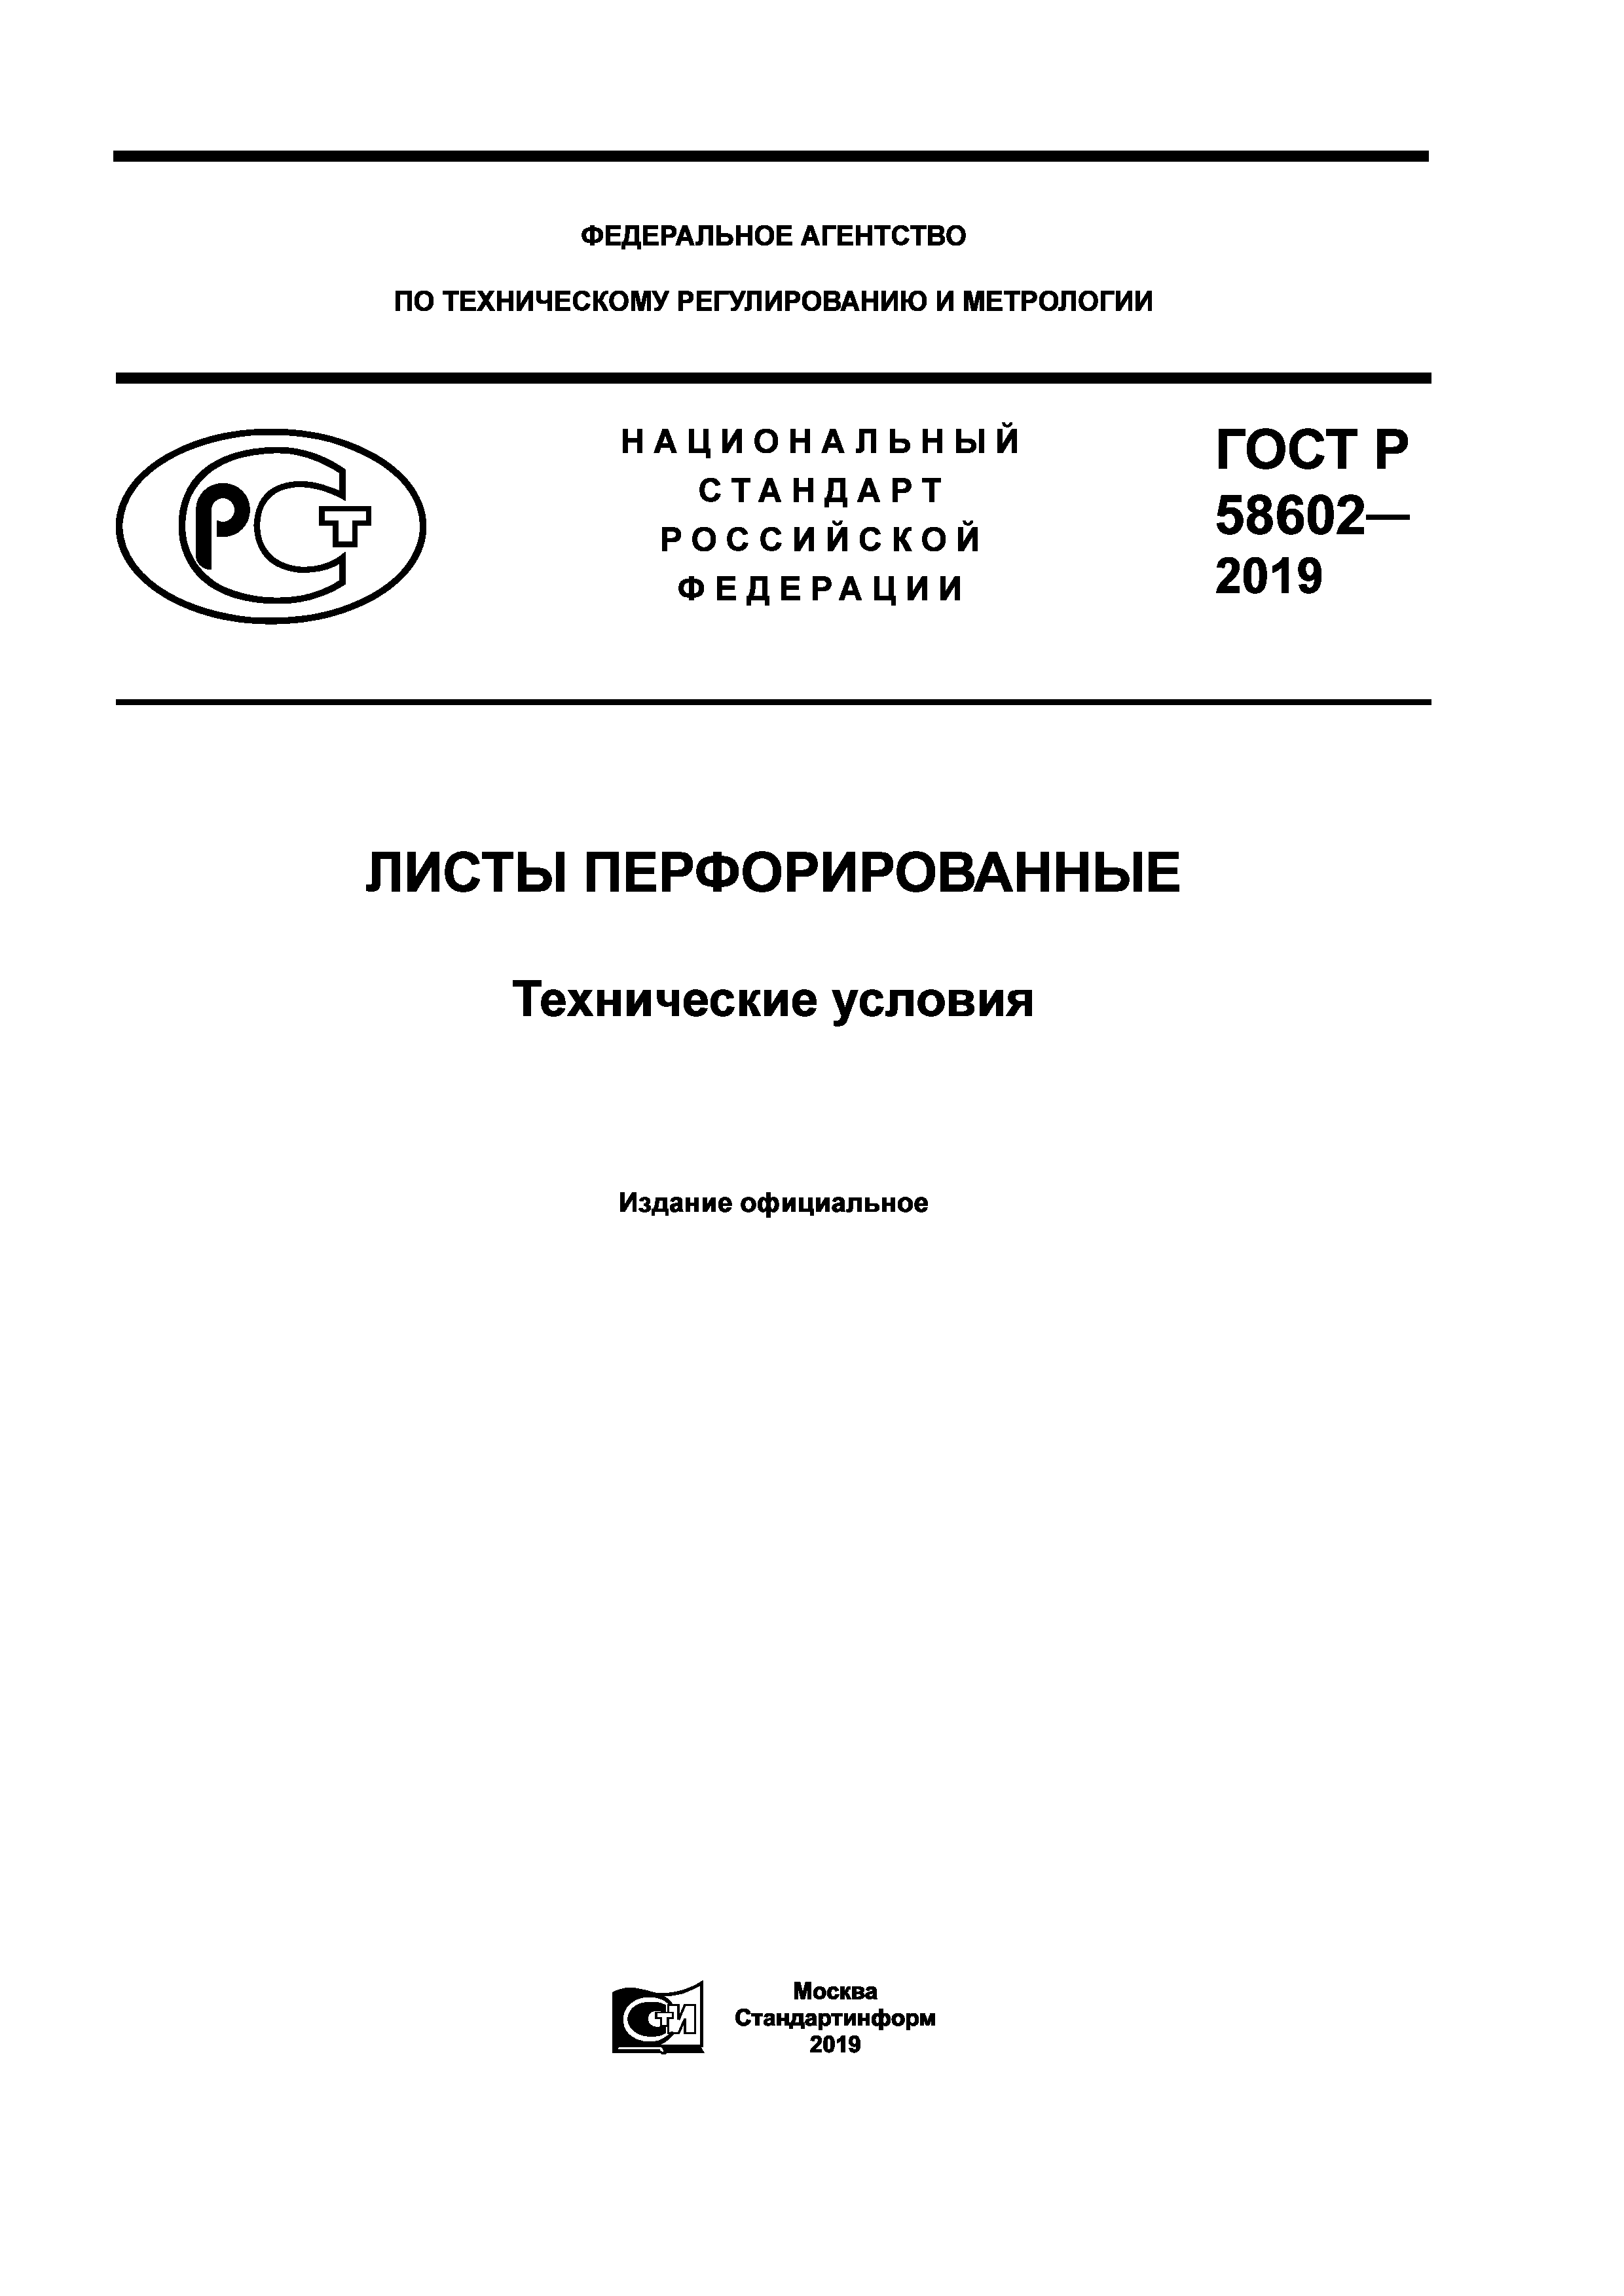 ГОСТ Р 58602-2019